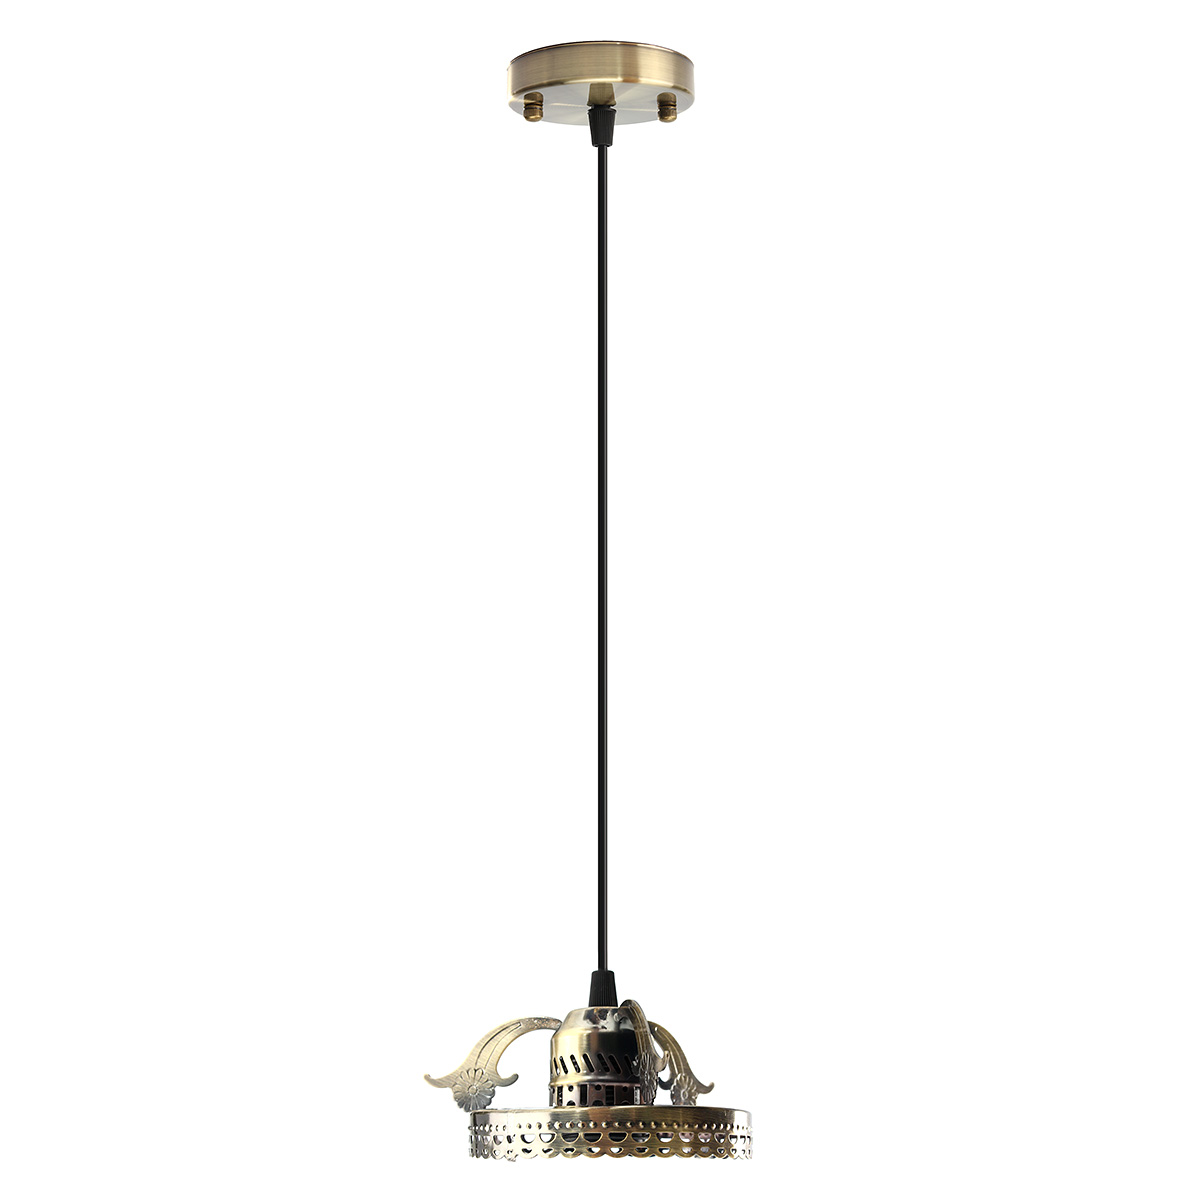 Antique-Industrial-Vintage-Ceiling-Pendant-Light-Lamp-Bulb-Chandelier-Fixture-For-Indoor-Lighting-1113882-5